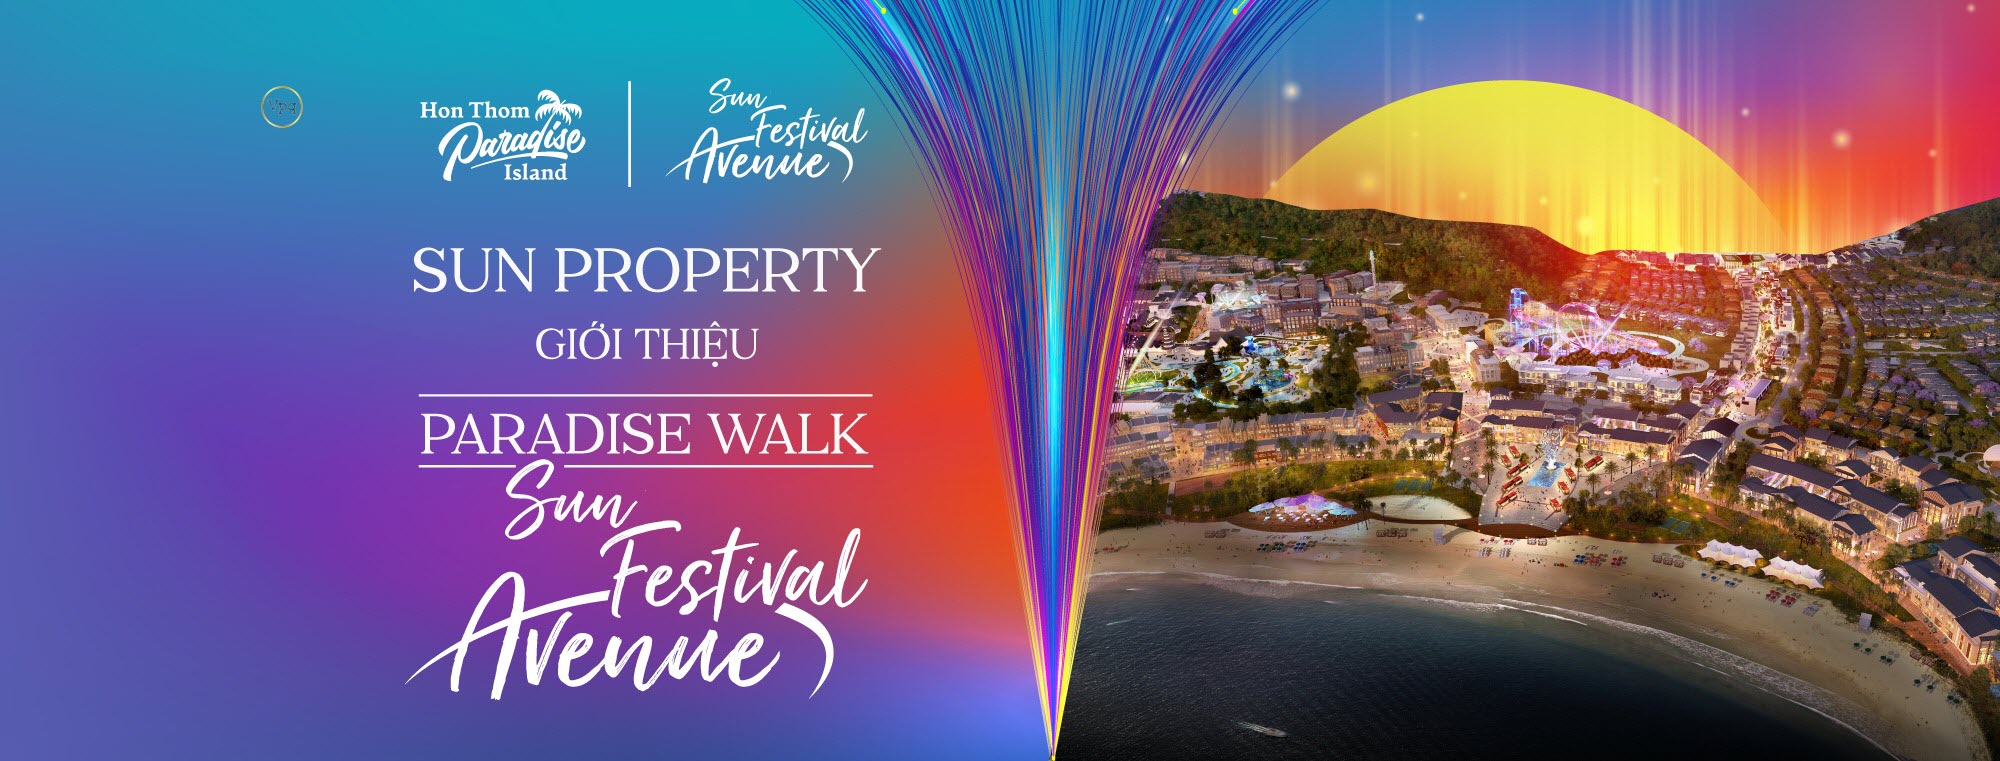 Sun Property giới thiệu Paraside Walk - Sun Festival Avenue